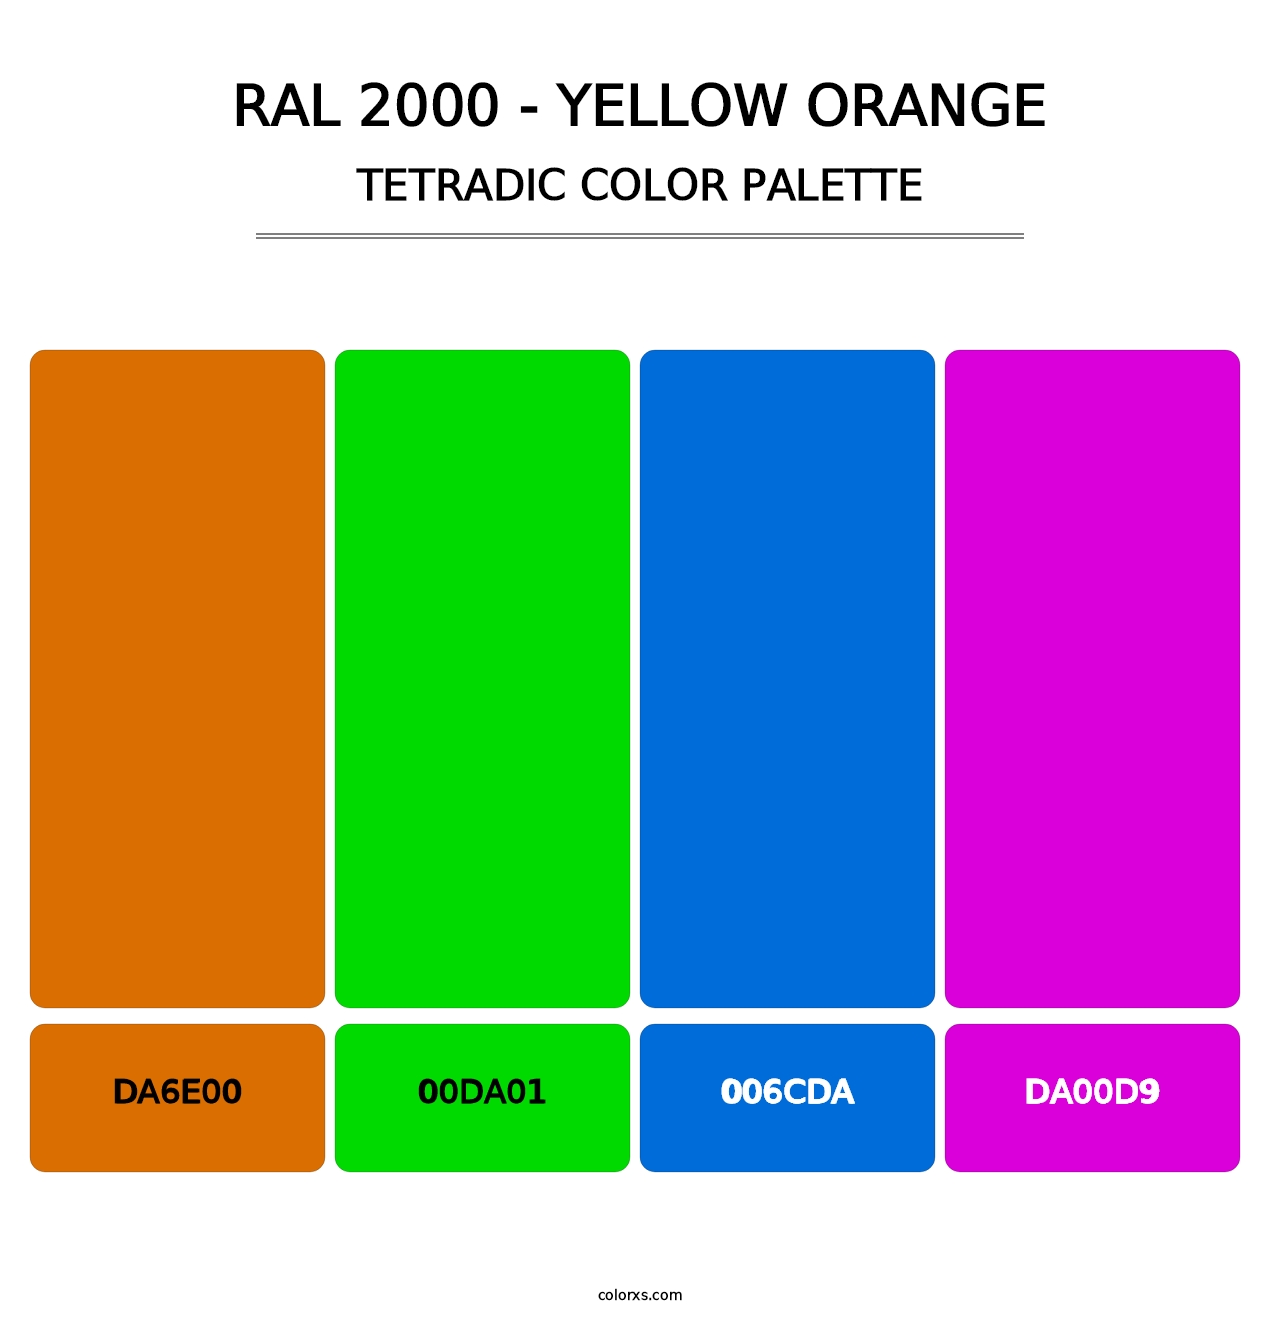 RAL 2000 - Yellow Orange - Tetradic Color Palette